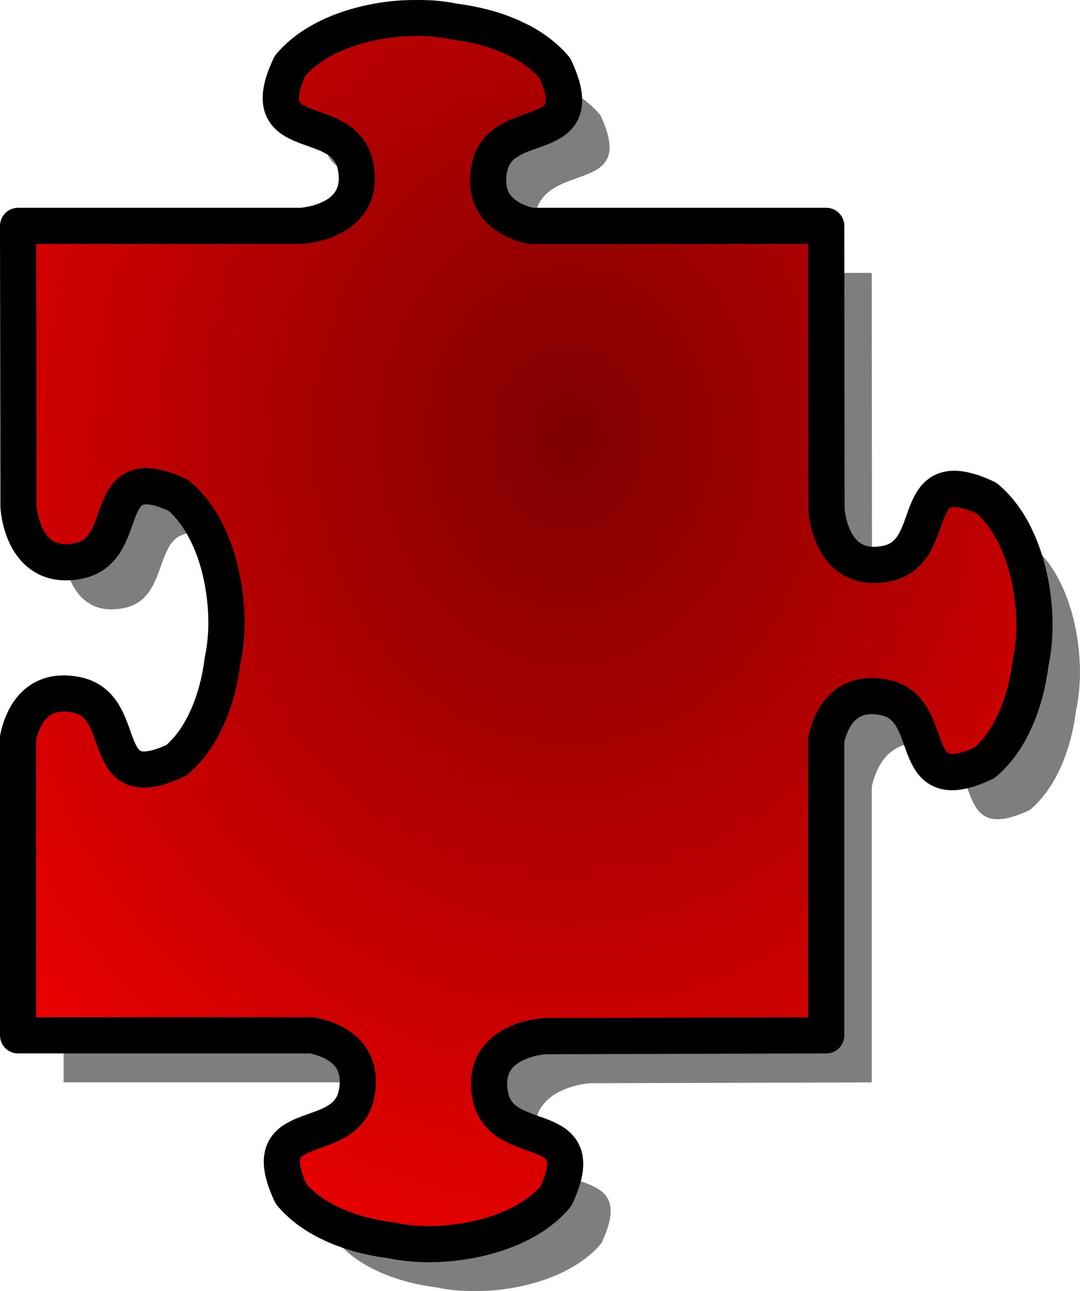 Red Jigsaw piece 05 png transparent